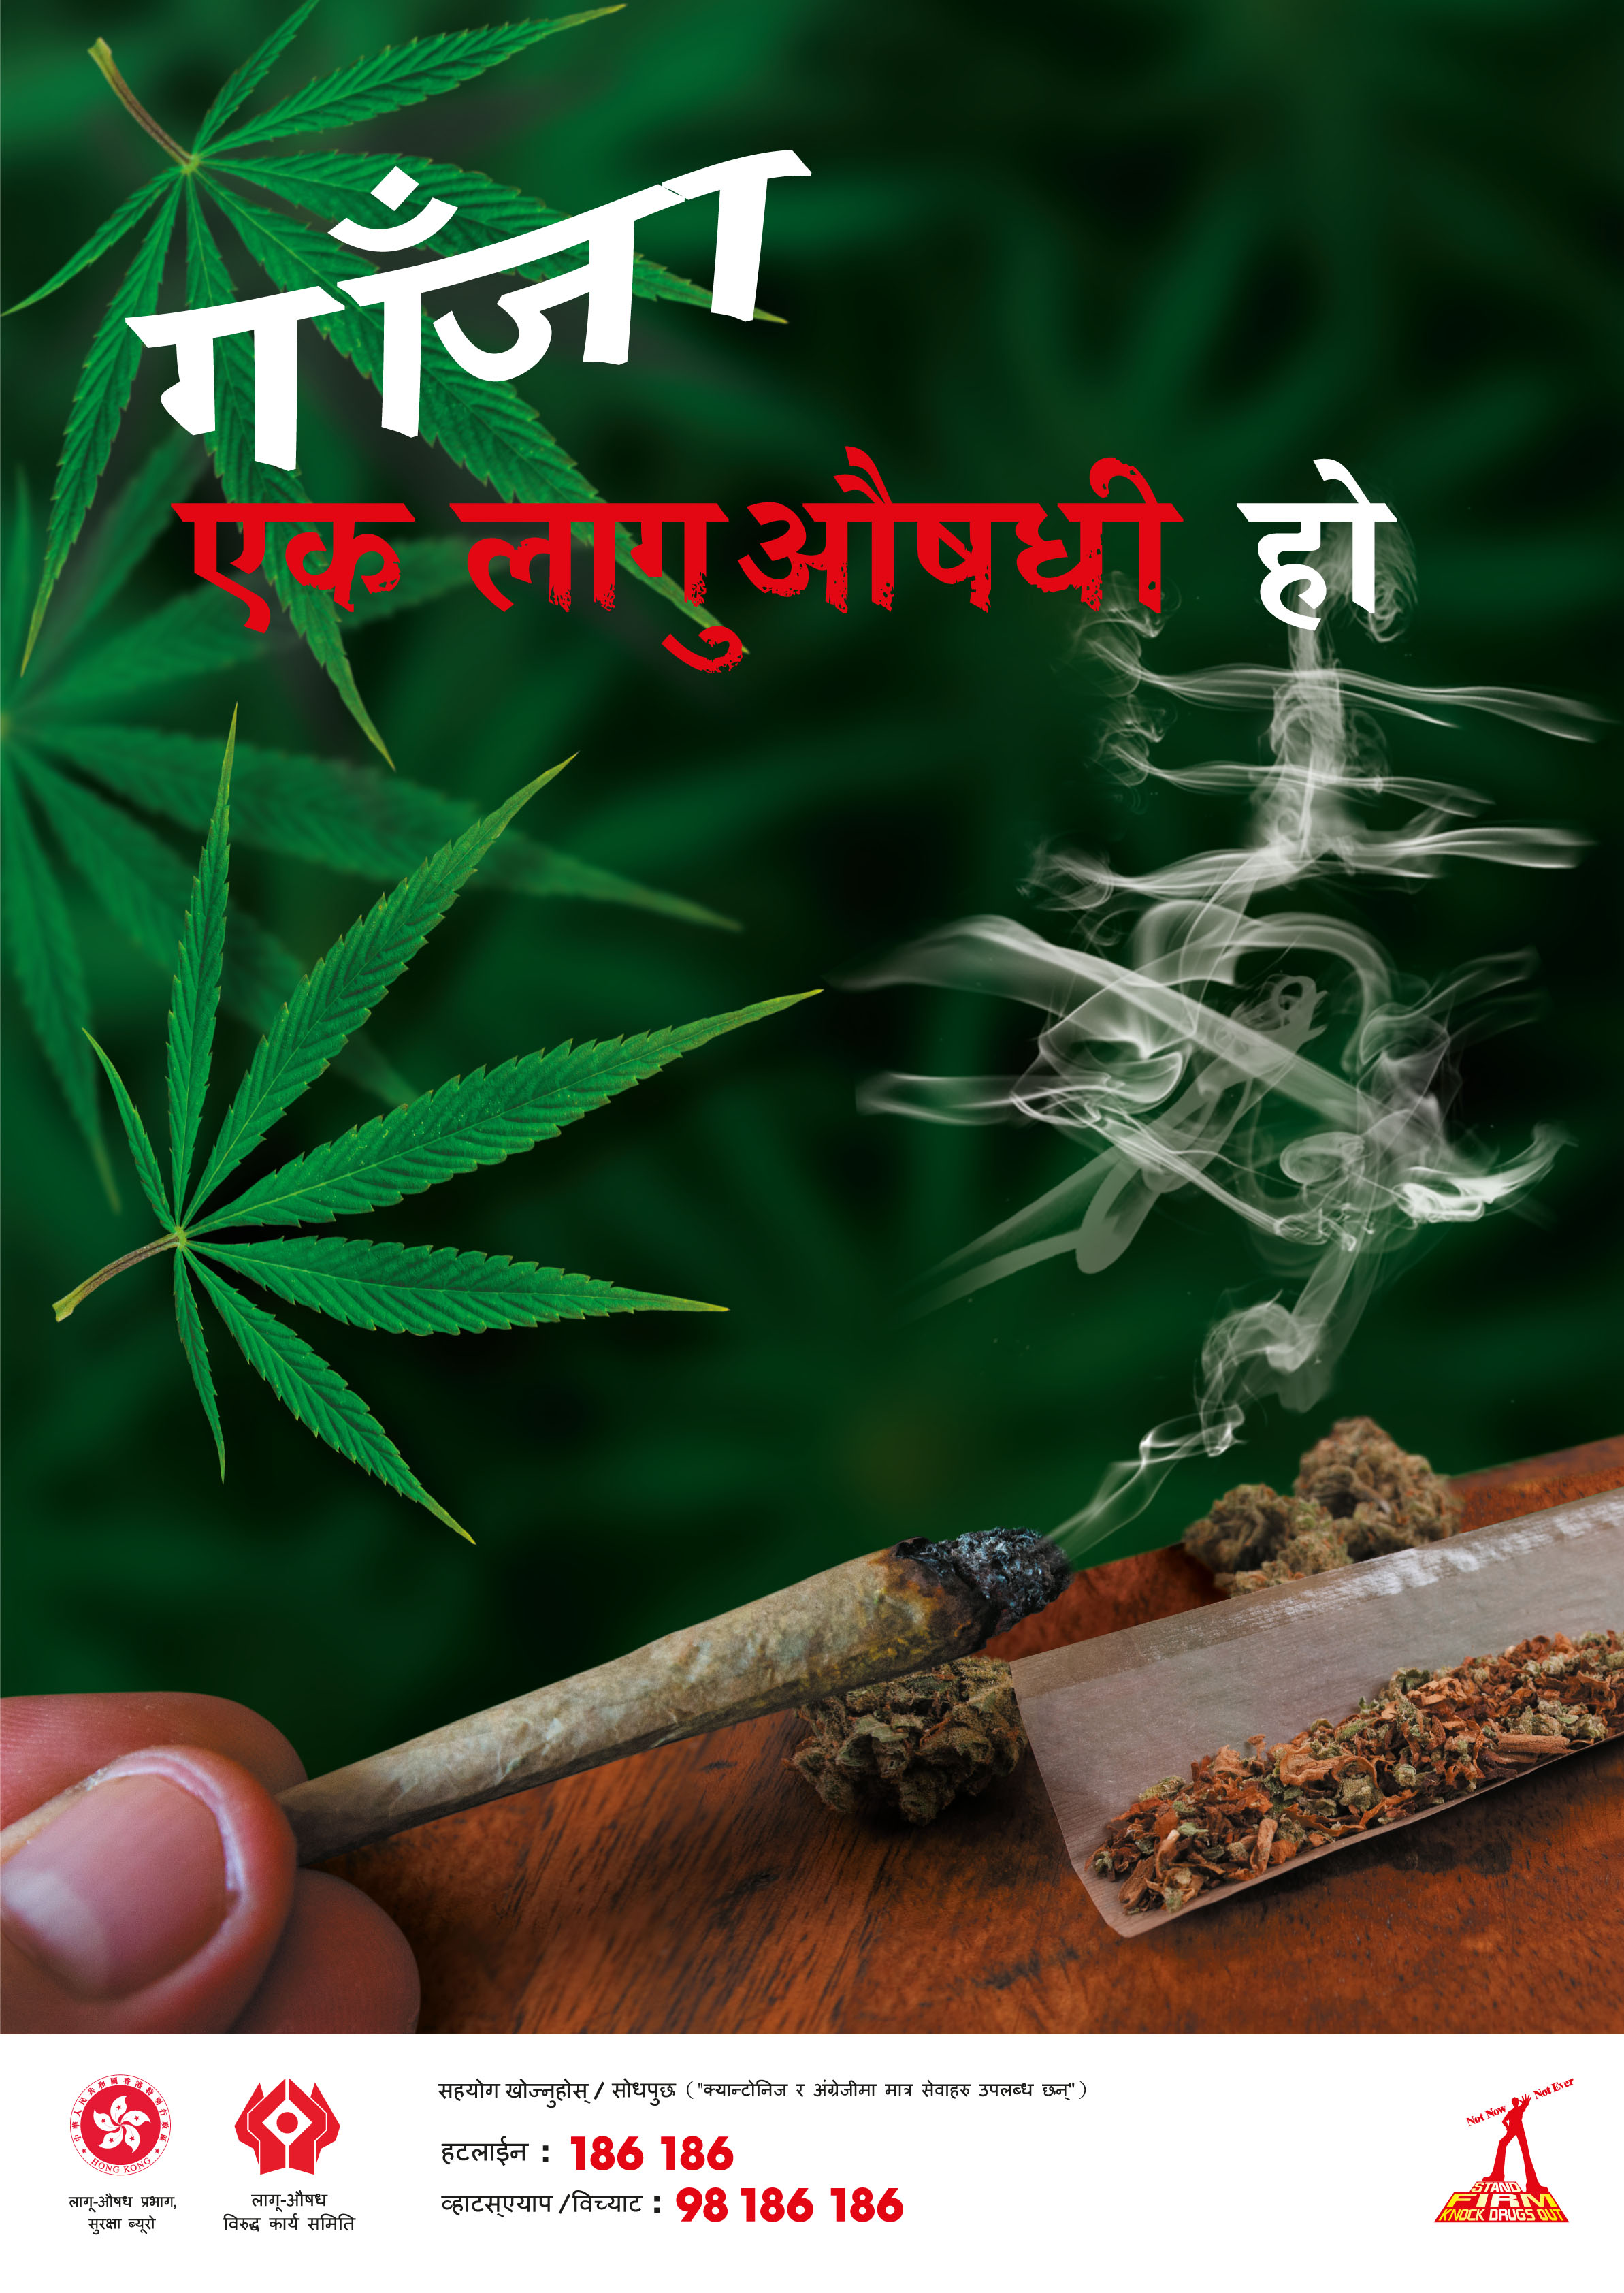 Anti-drug poster "Cannabis is a drug" - Nepali version